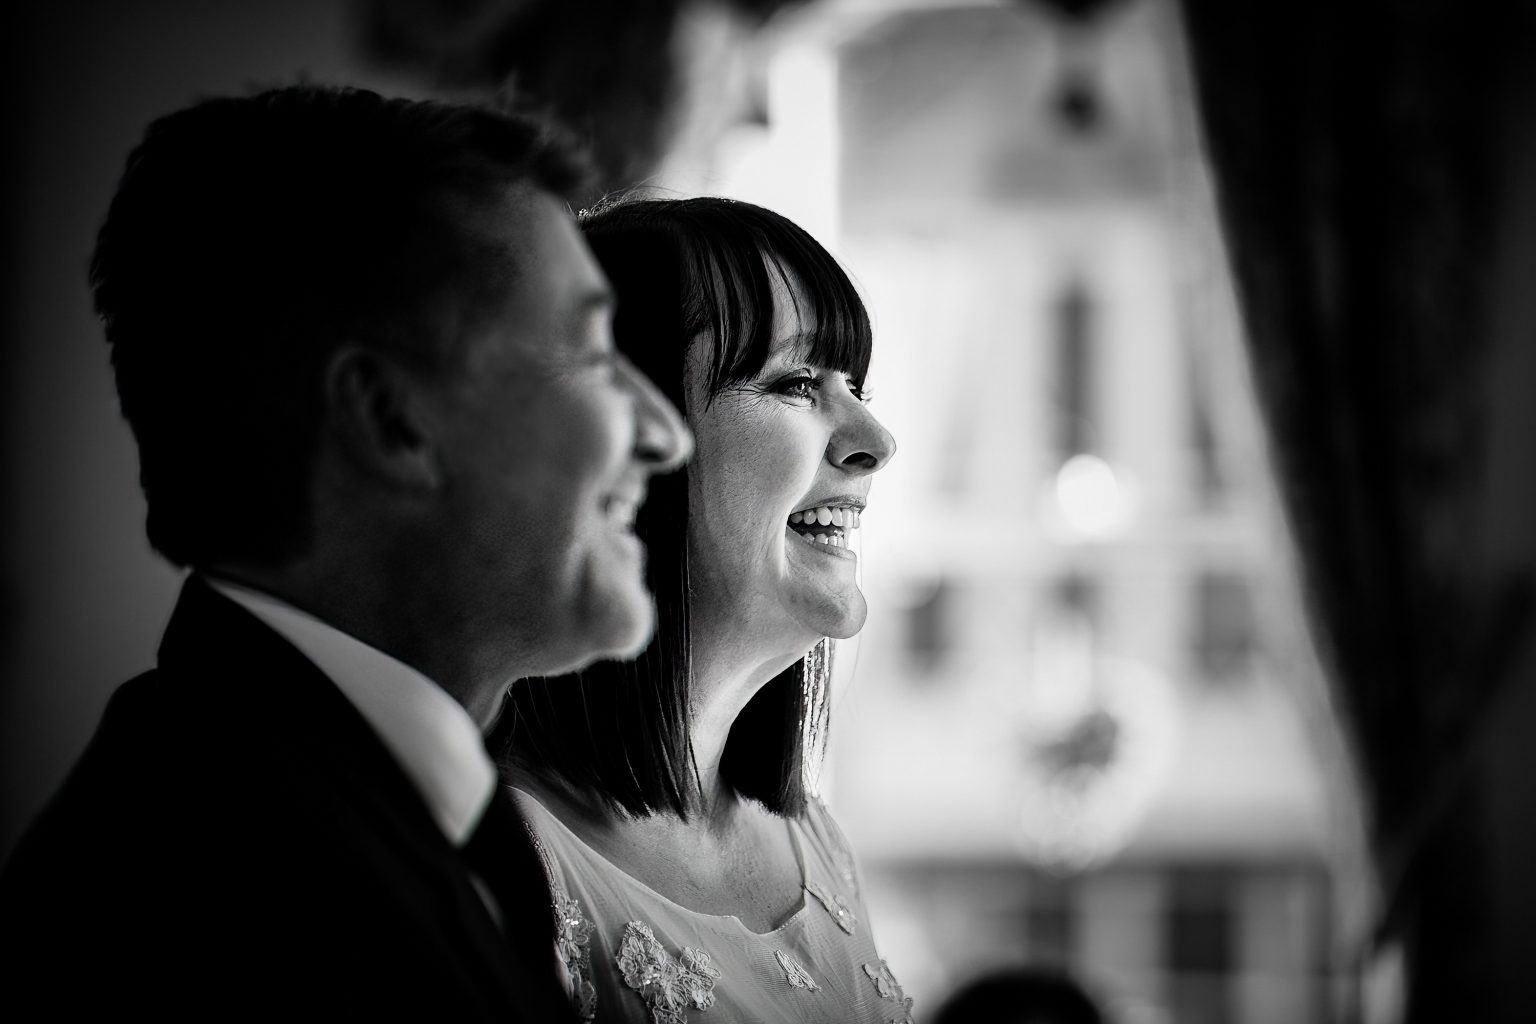 Banbury & Cotswolds wedding photographer - St Albans and Rickmansworth wedding photography